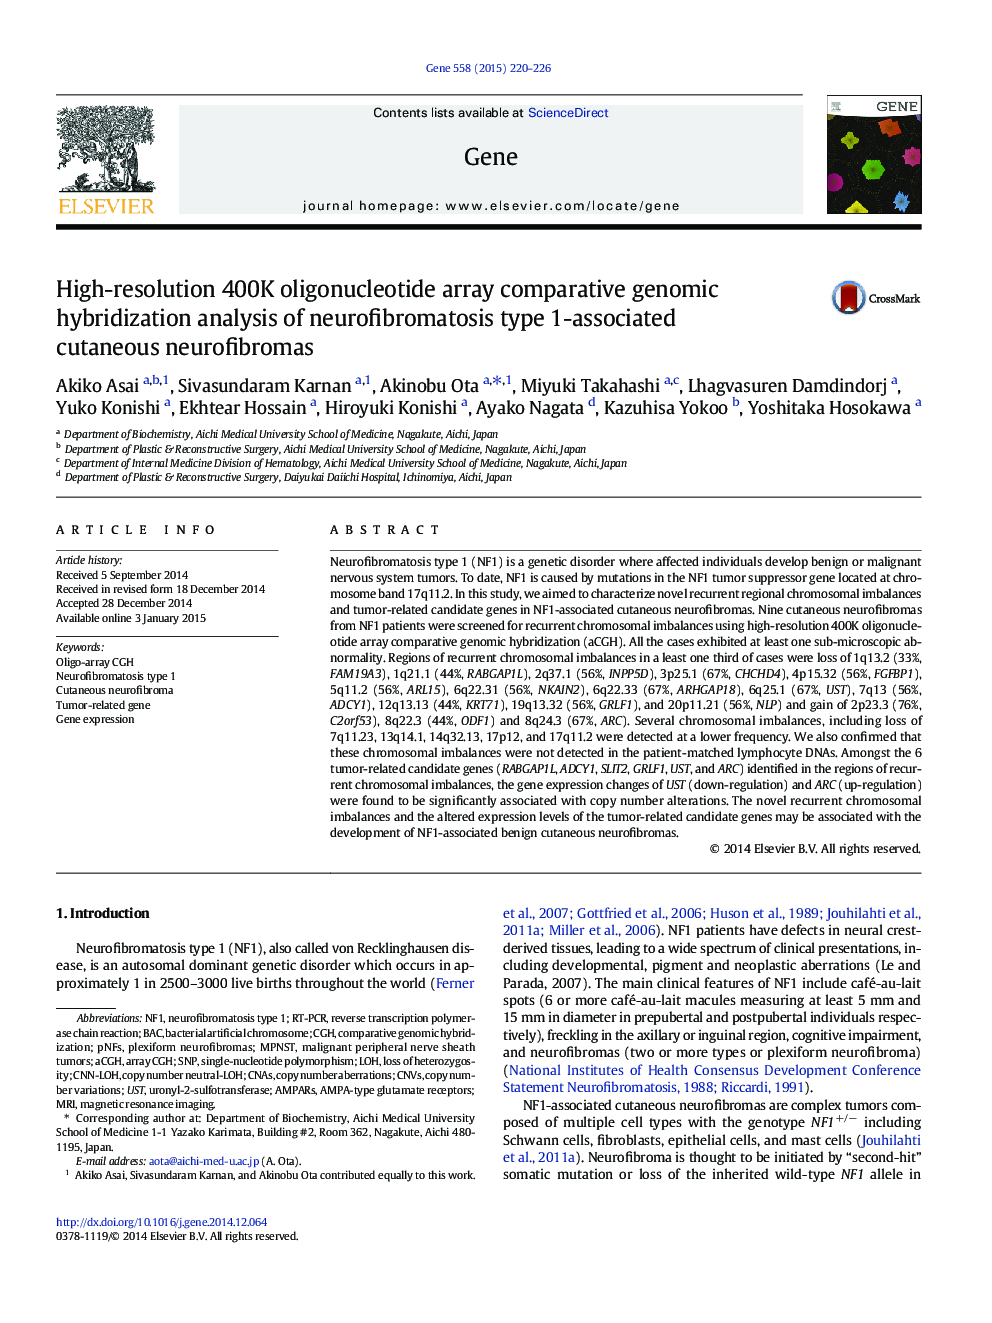 High-resolution 400K oligonucleotide array comparative genomic hybridization analysis of neurofibromatosis type 1-associated cutaneous neurofibromas